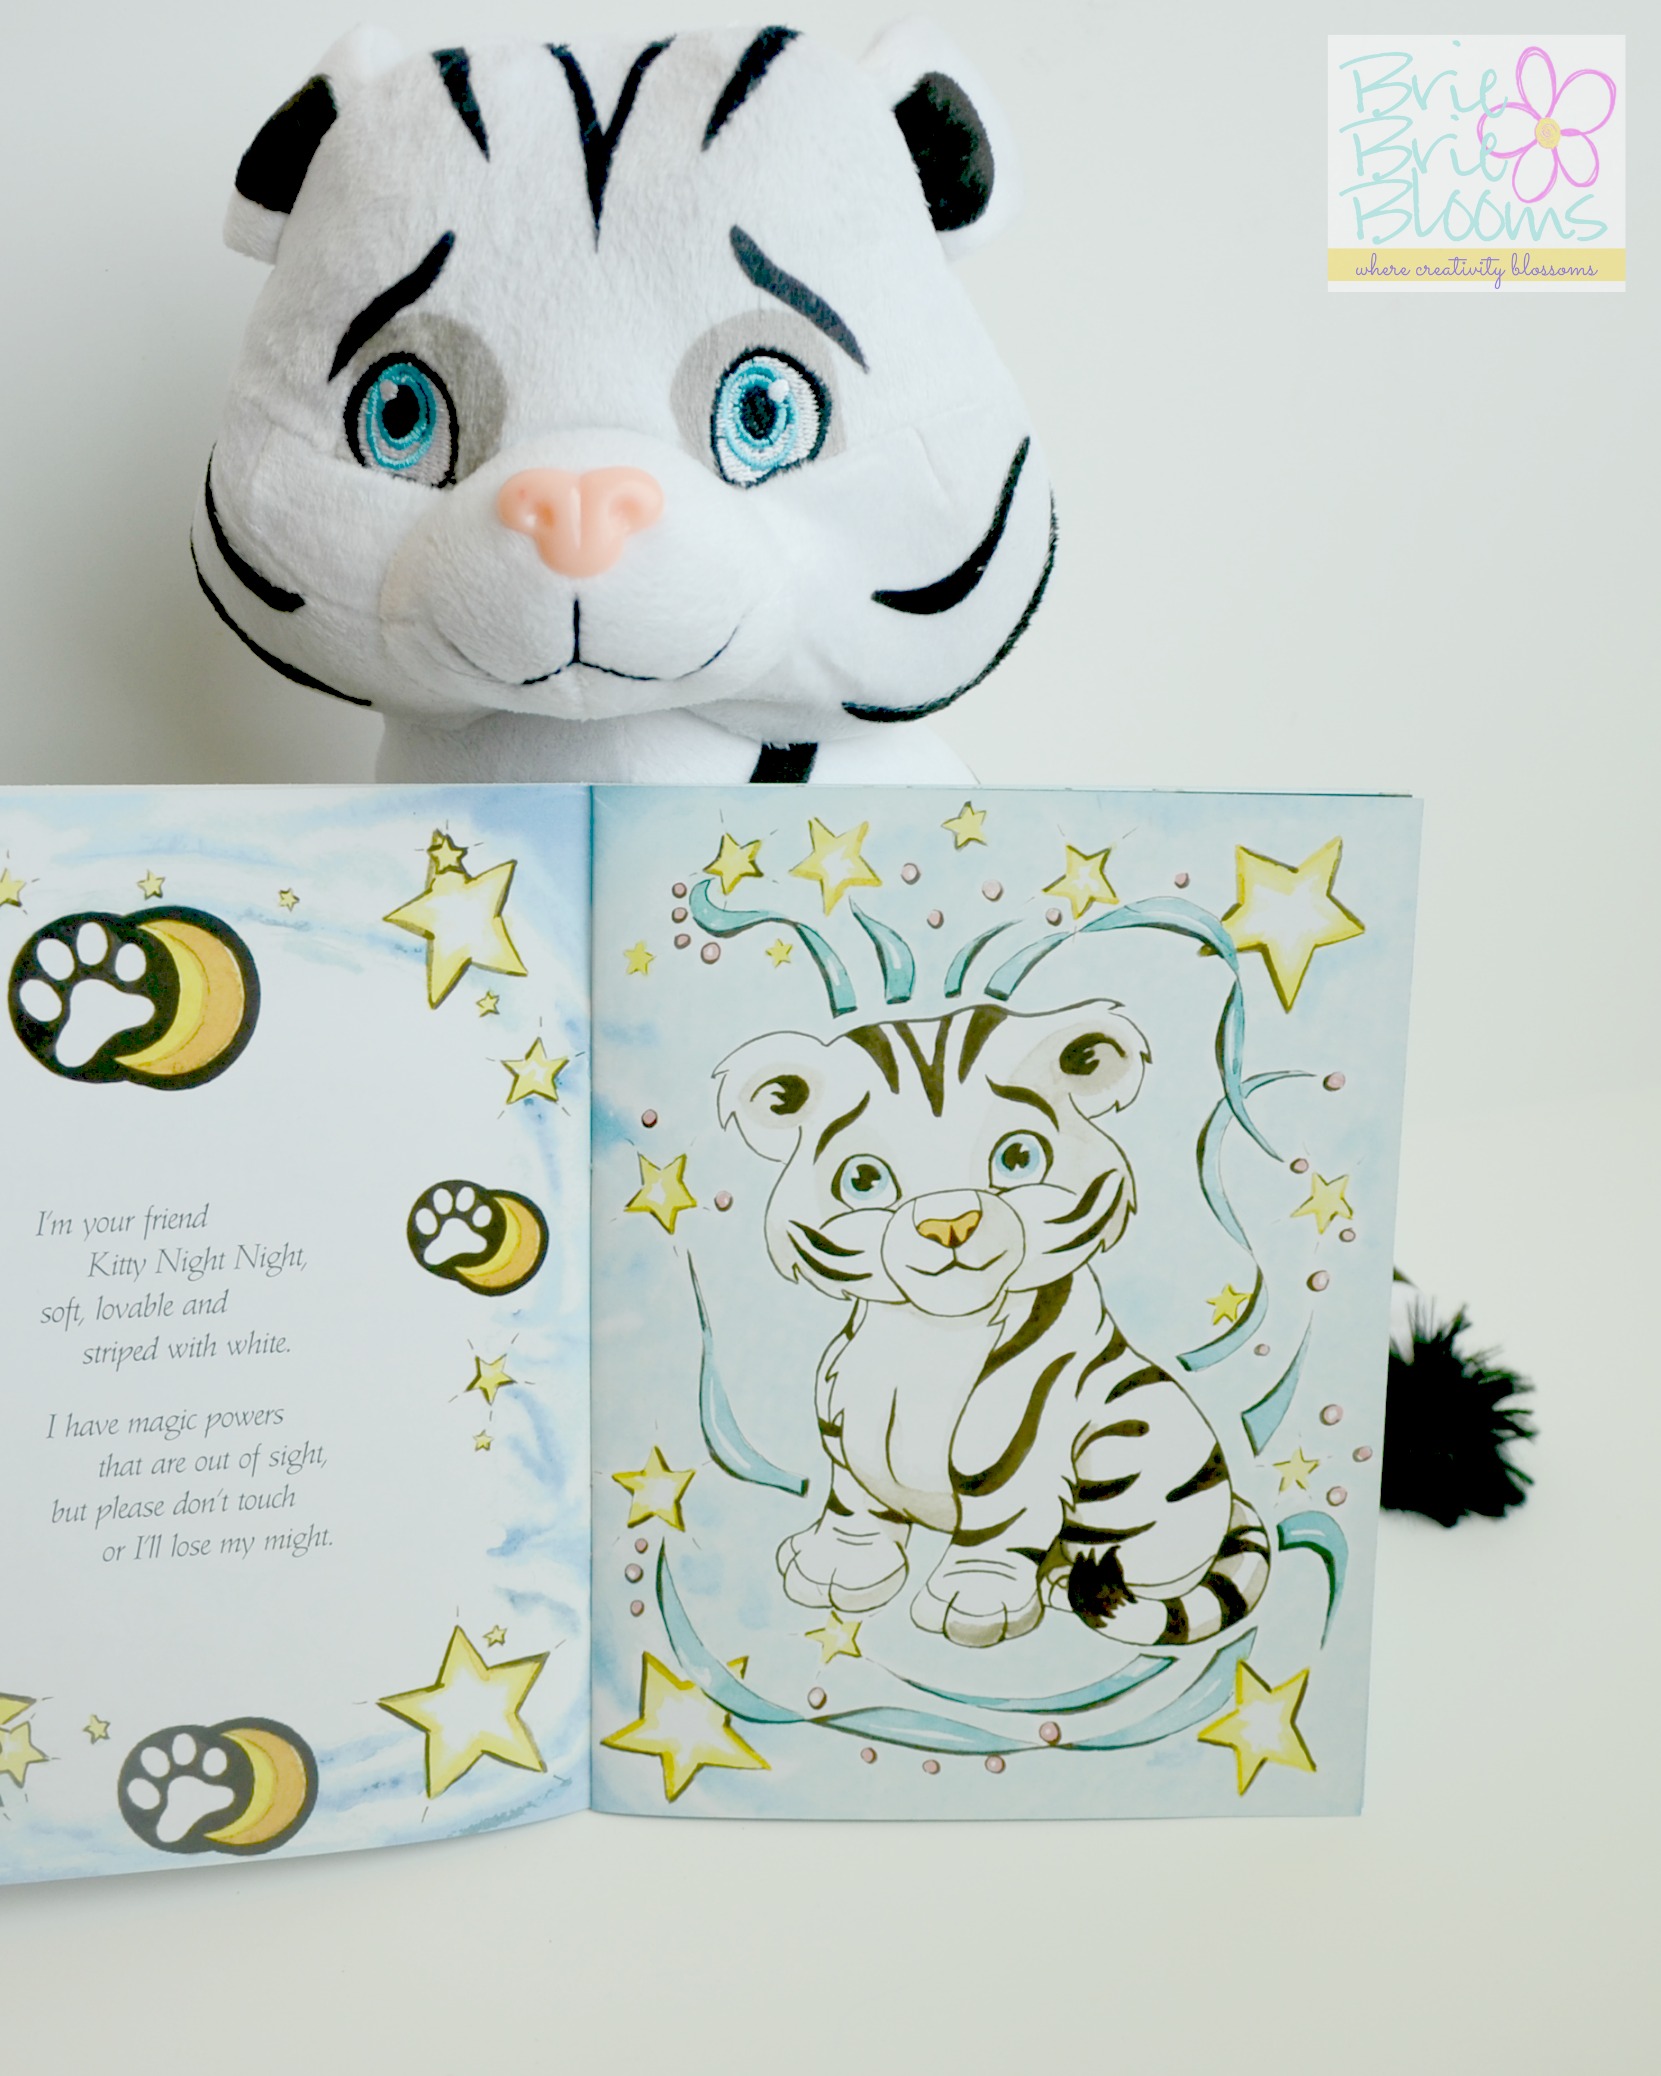 Kitty Night Night book and tiger